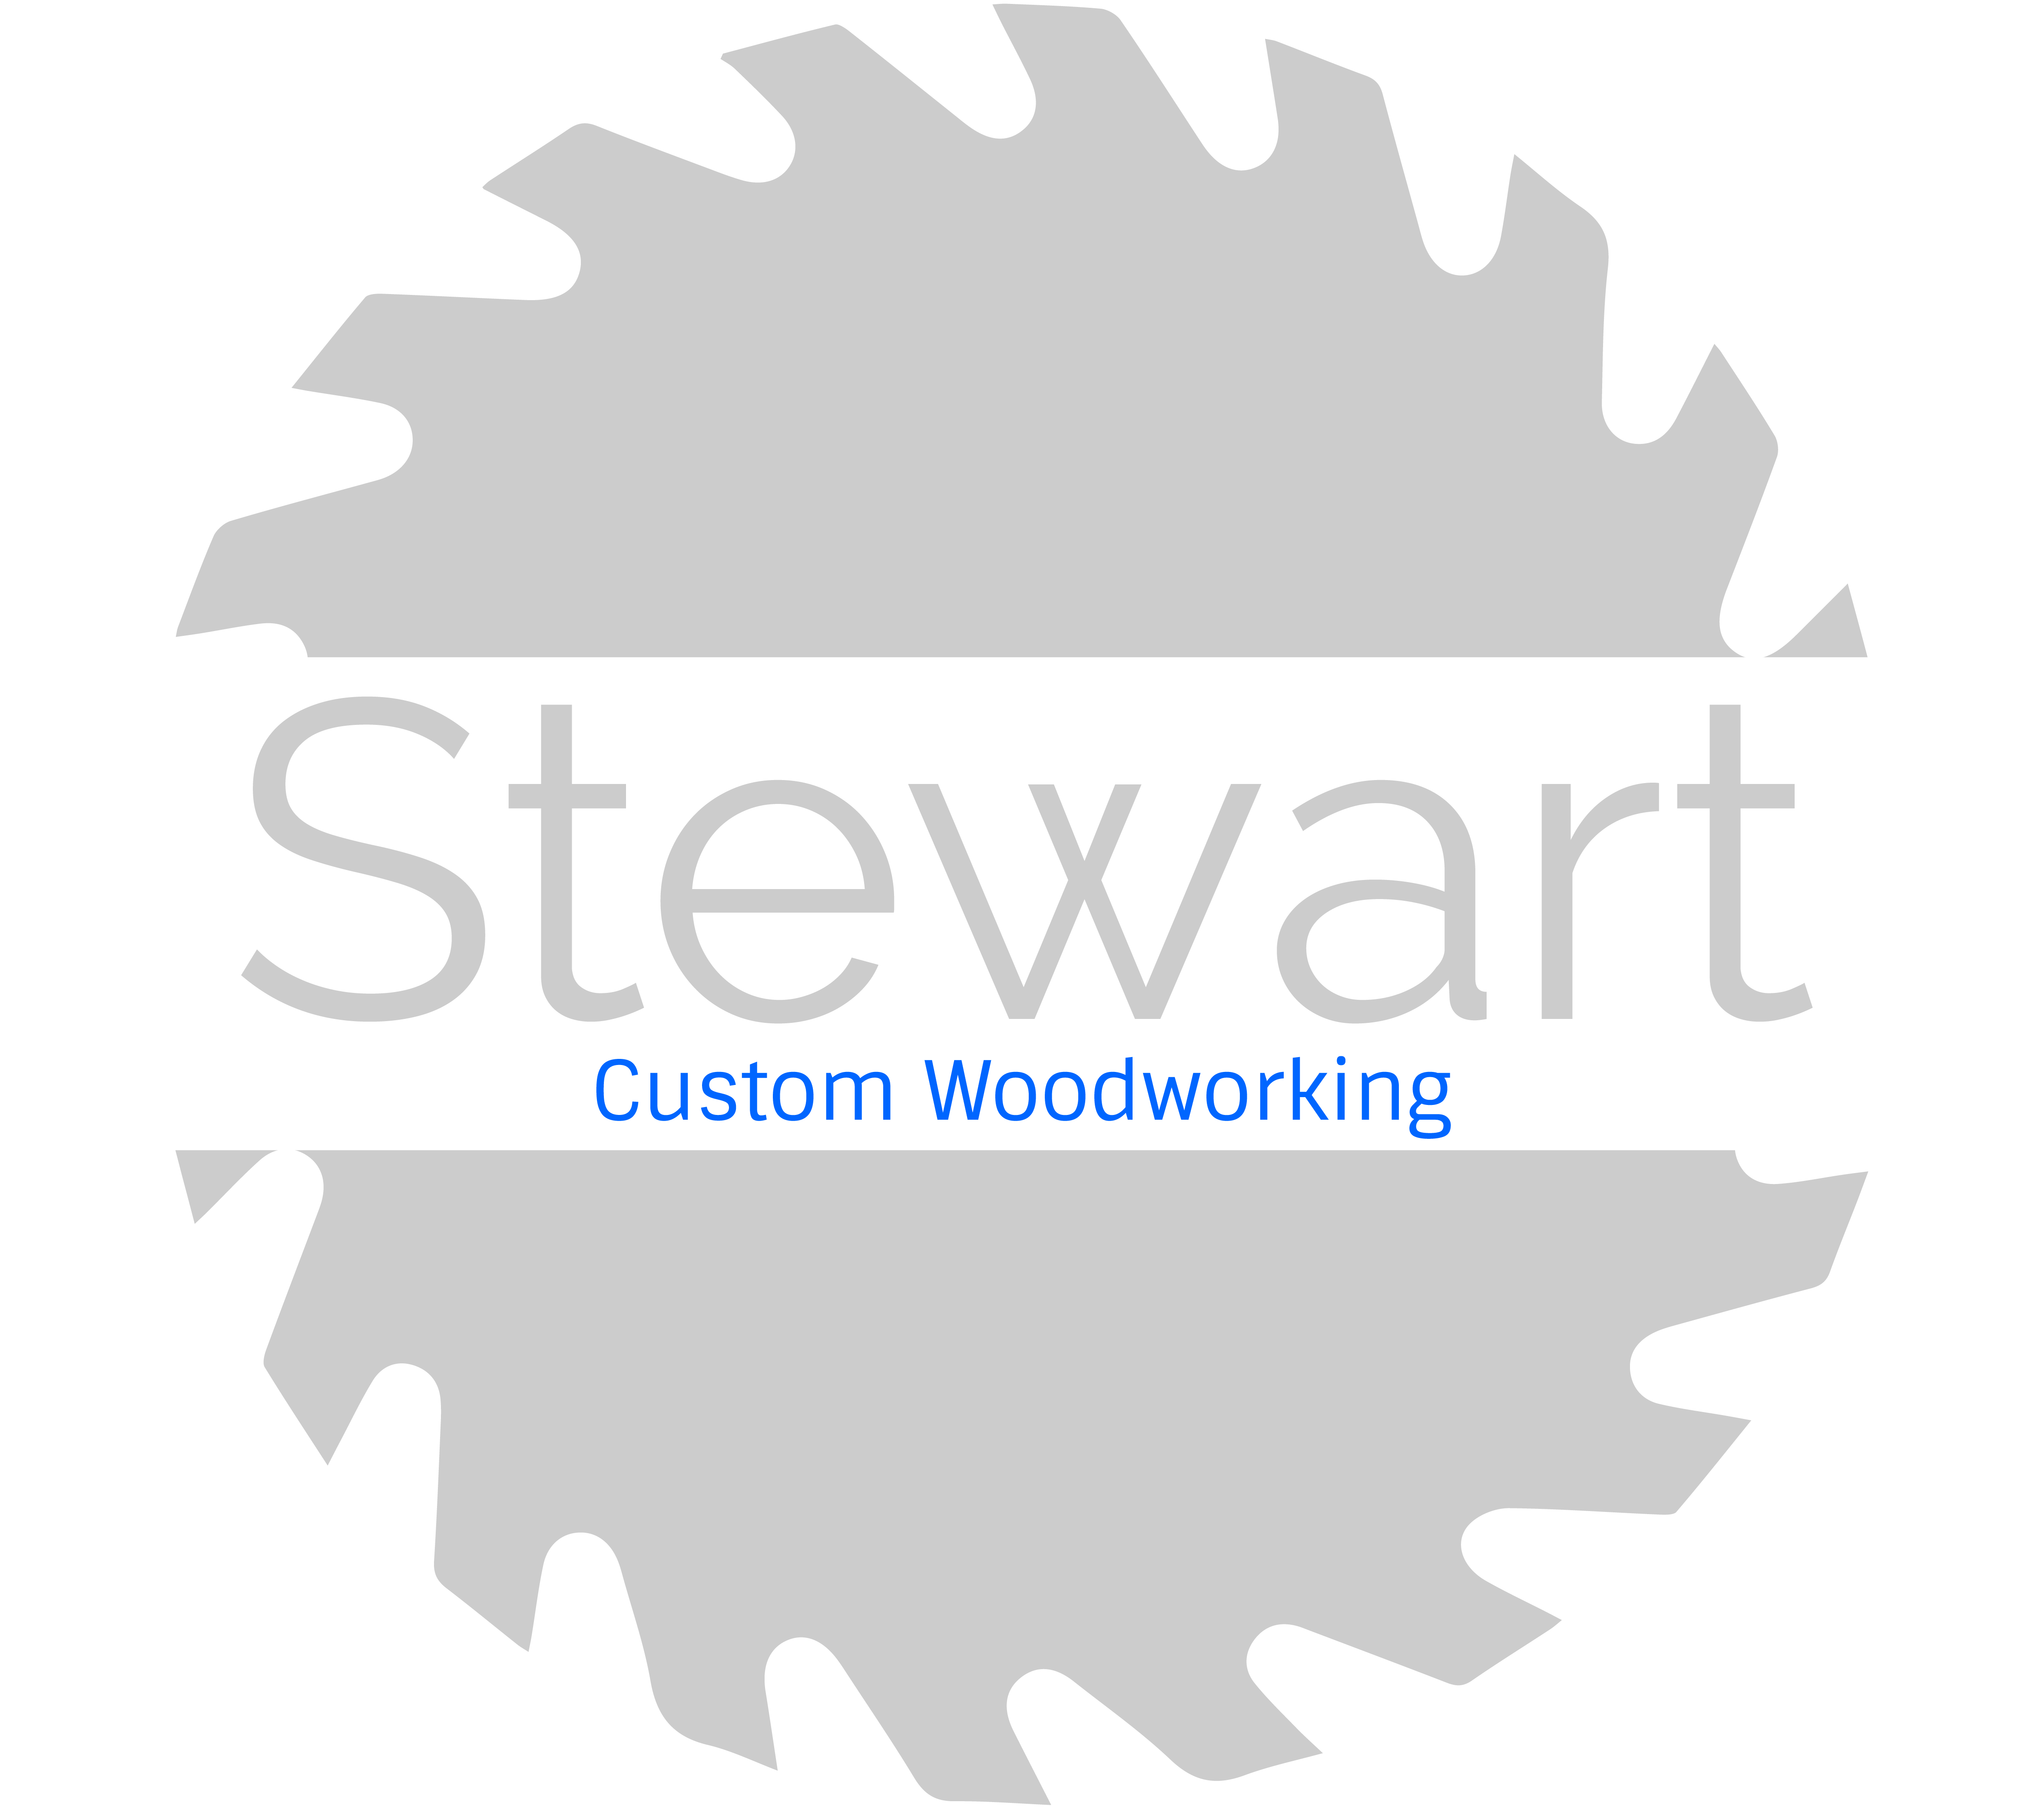 Stewart Custom Woodworking